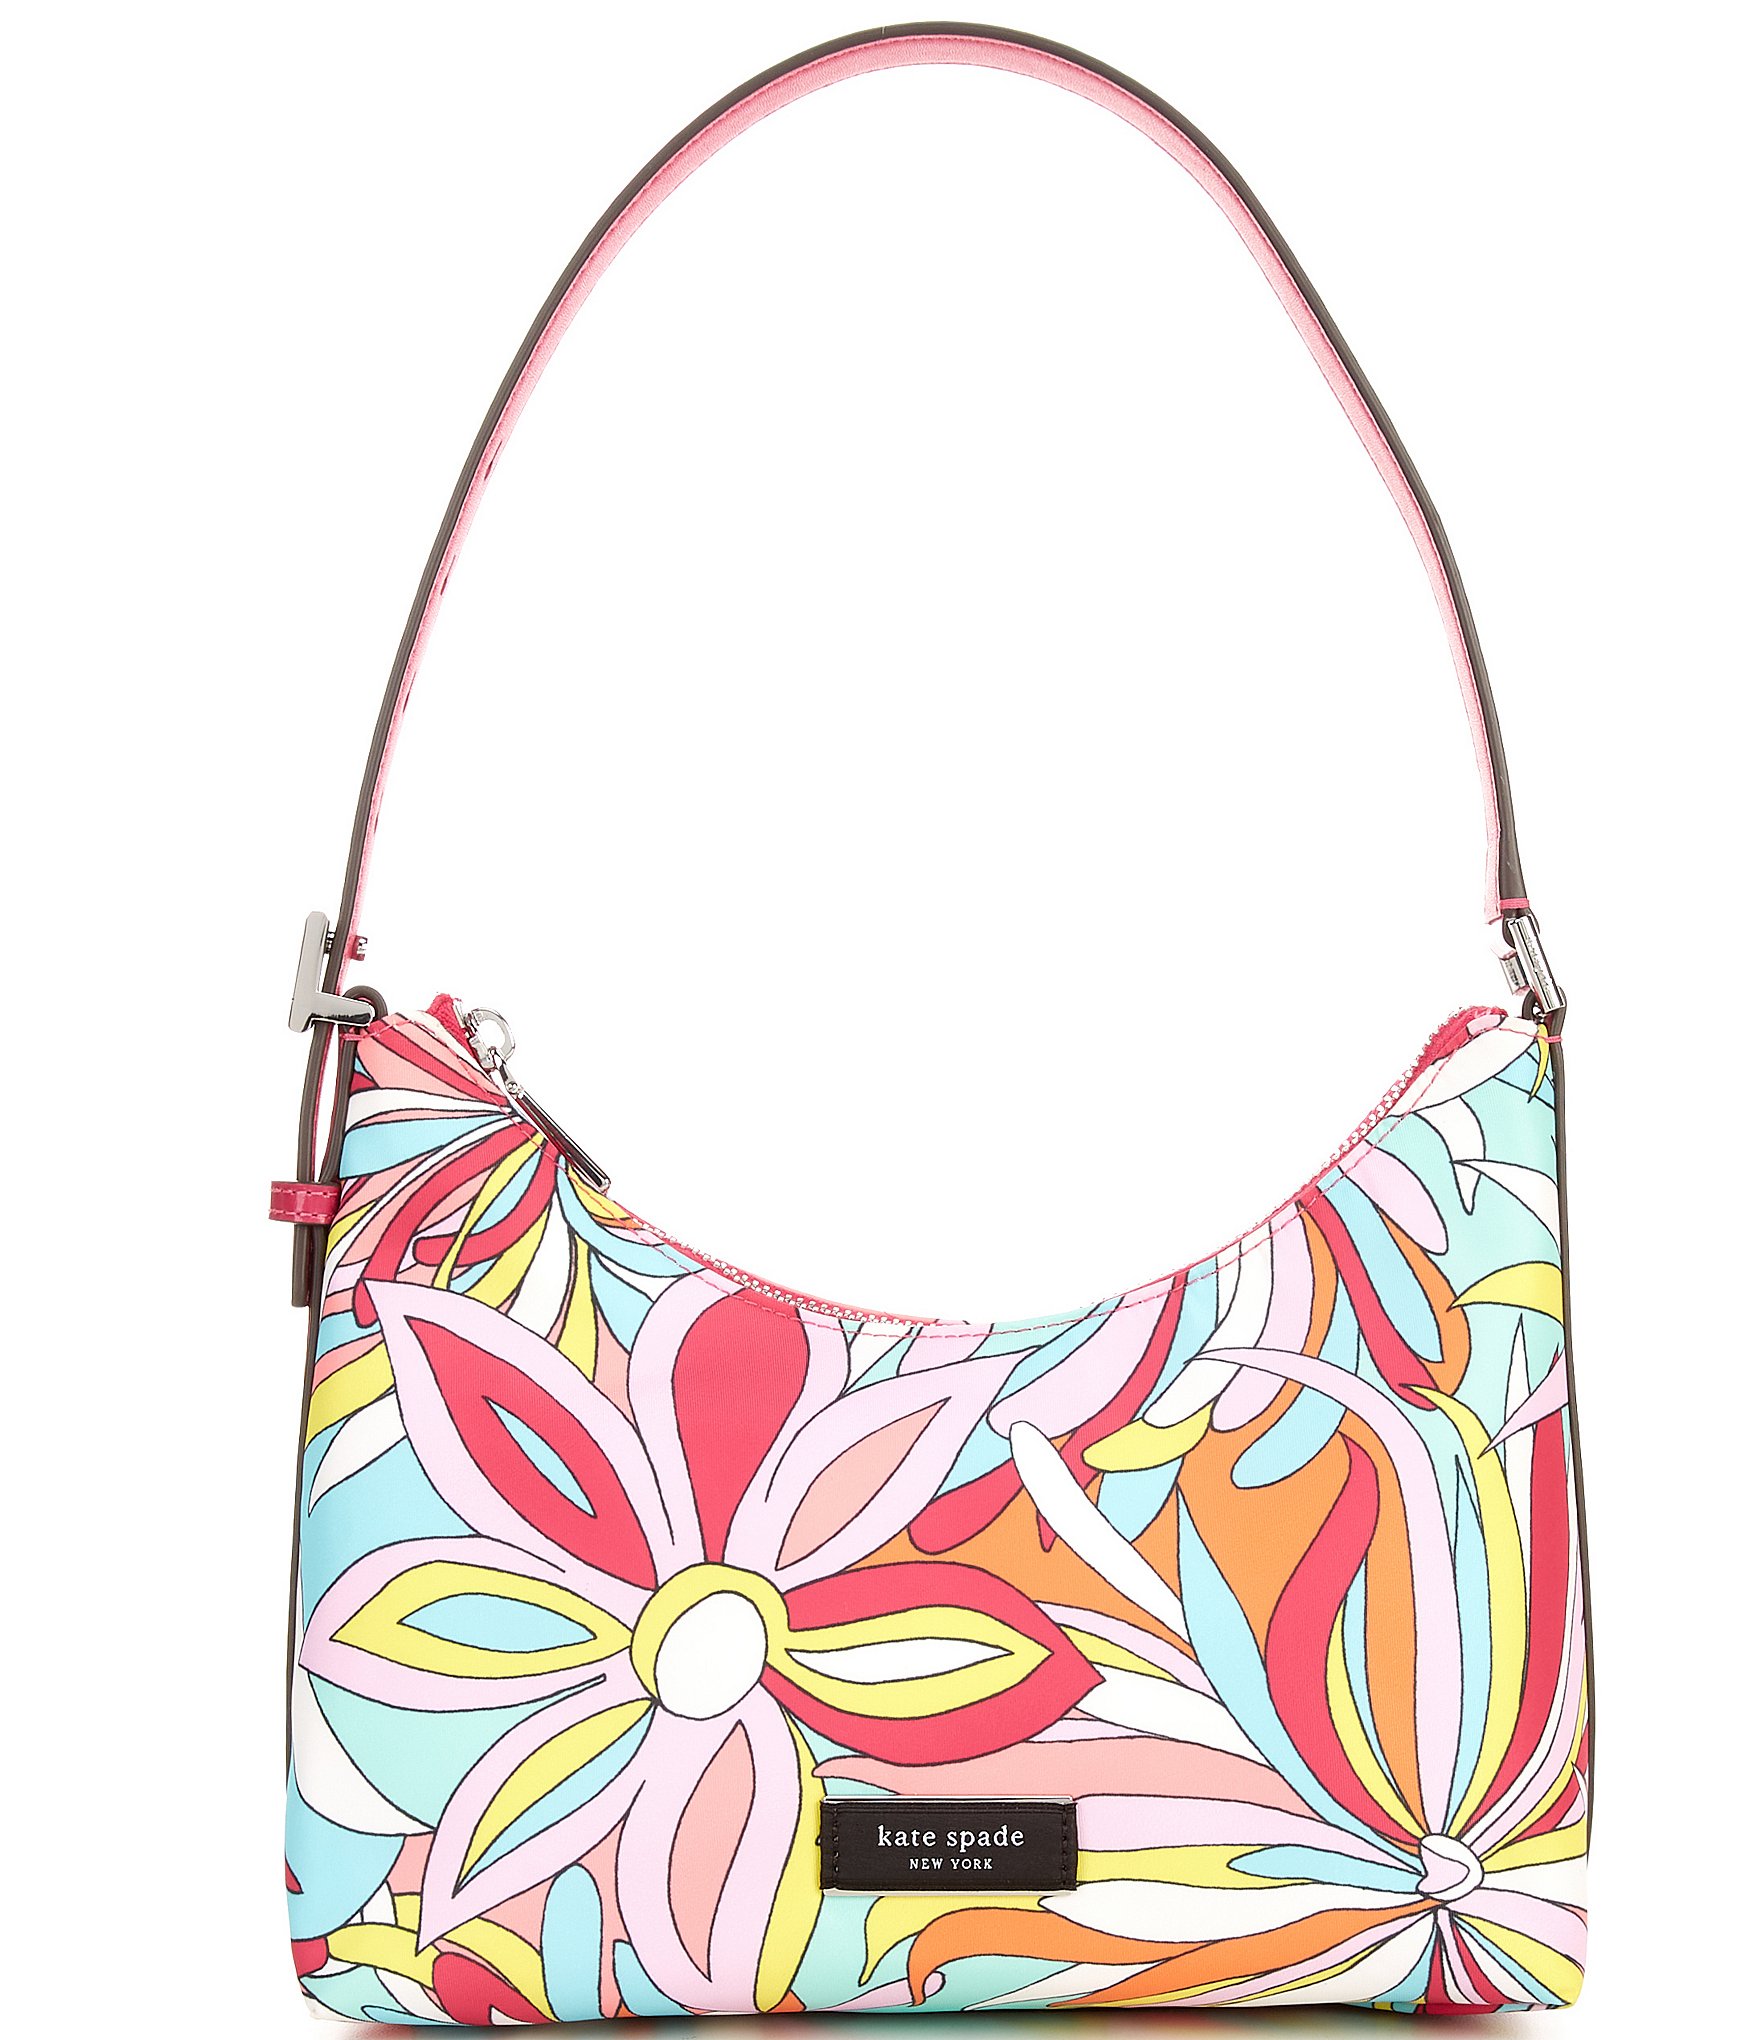 Kate Spade Floral Handbags